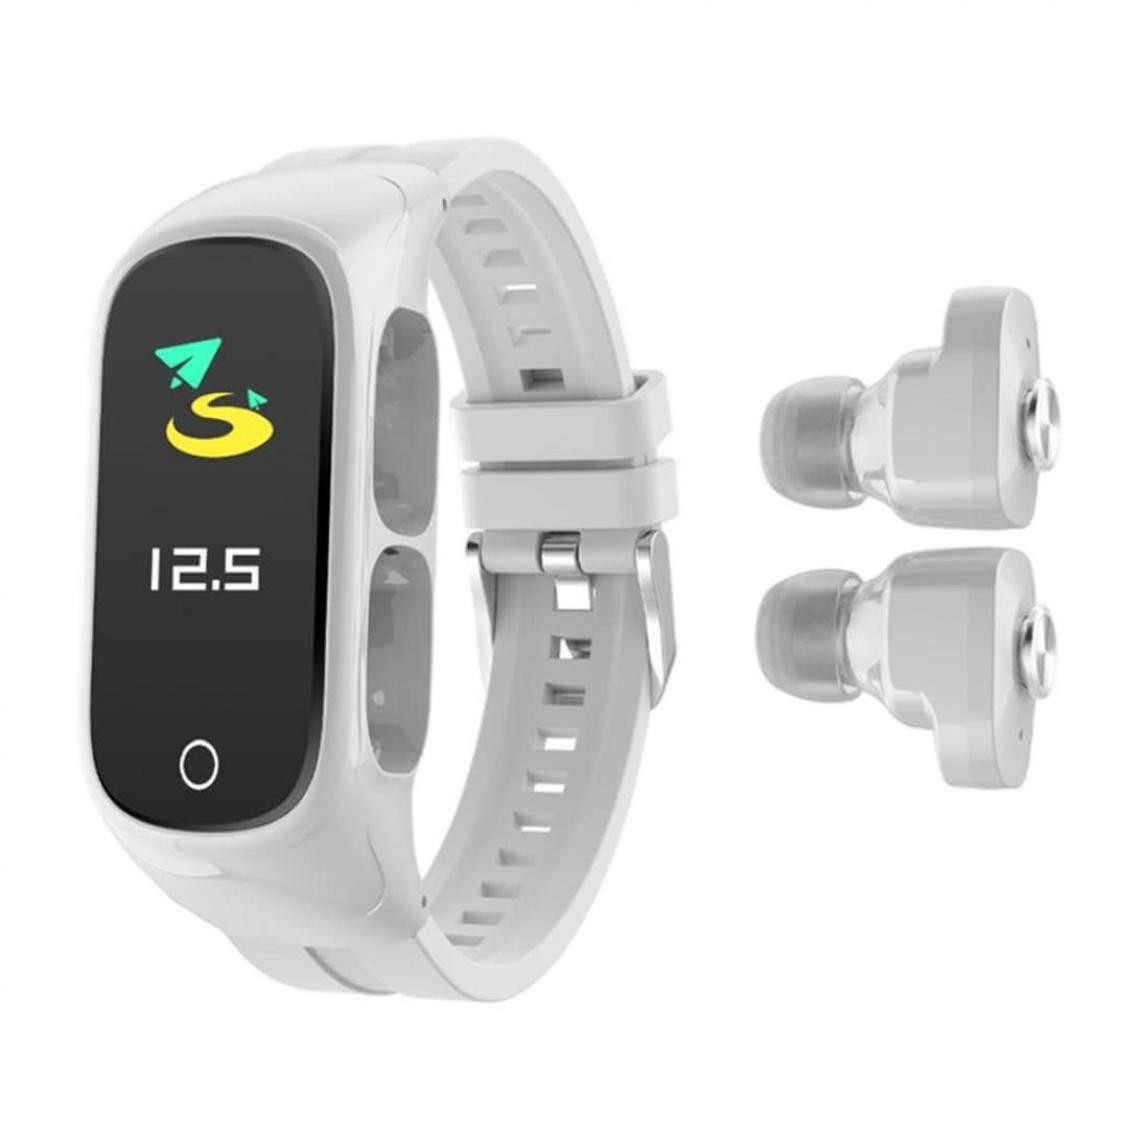 Chronotech Montres - 2-in-1 Smart Watch TWS Earbuds True Wireless BT5.0 Headphone Fitness Sports Tracker Black(White) - Montre connectée